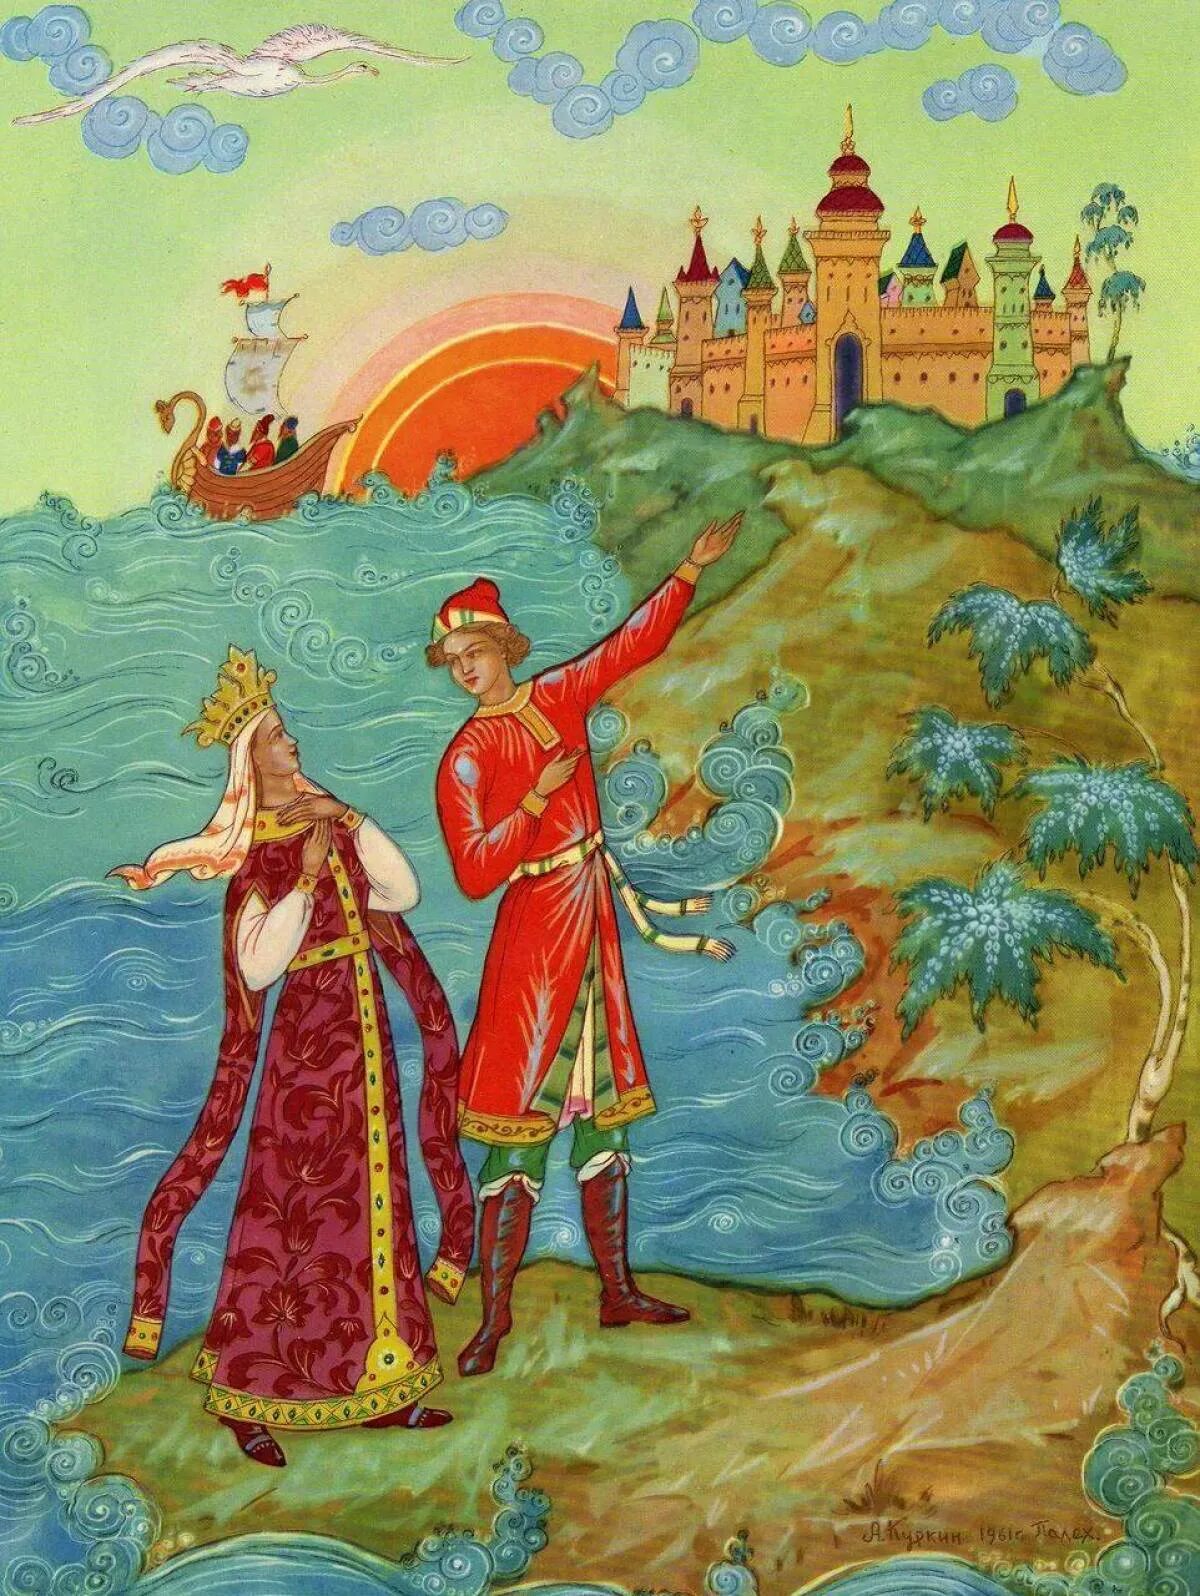 Сказка о царе Салтане. Пушкин сказка о царе Салтане иллюстрации. Царь Салтан и Гвидон.